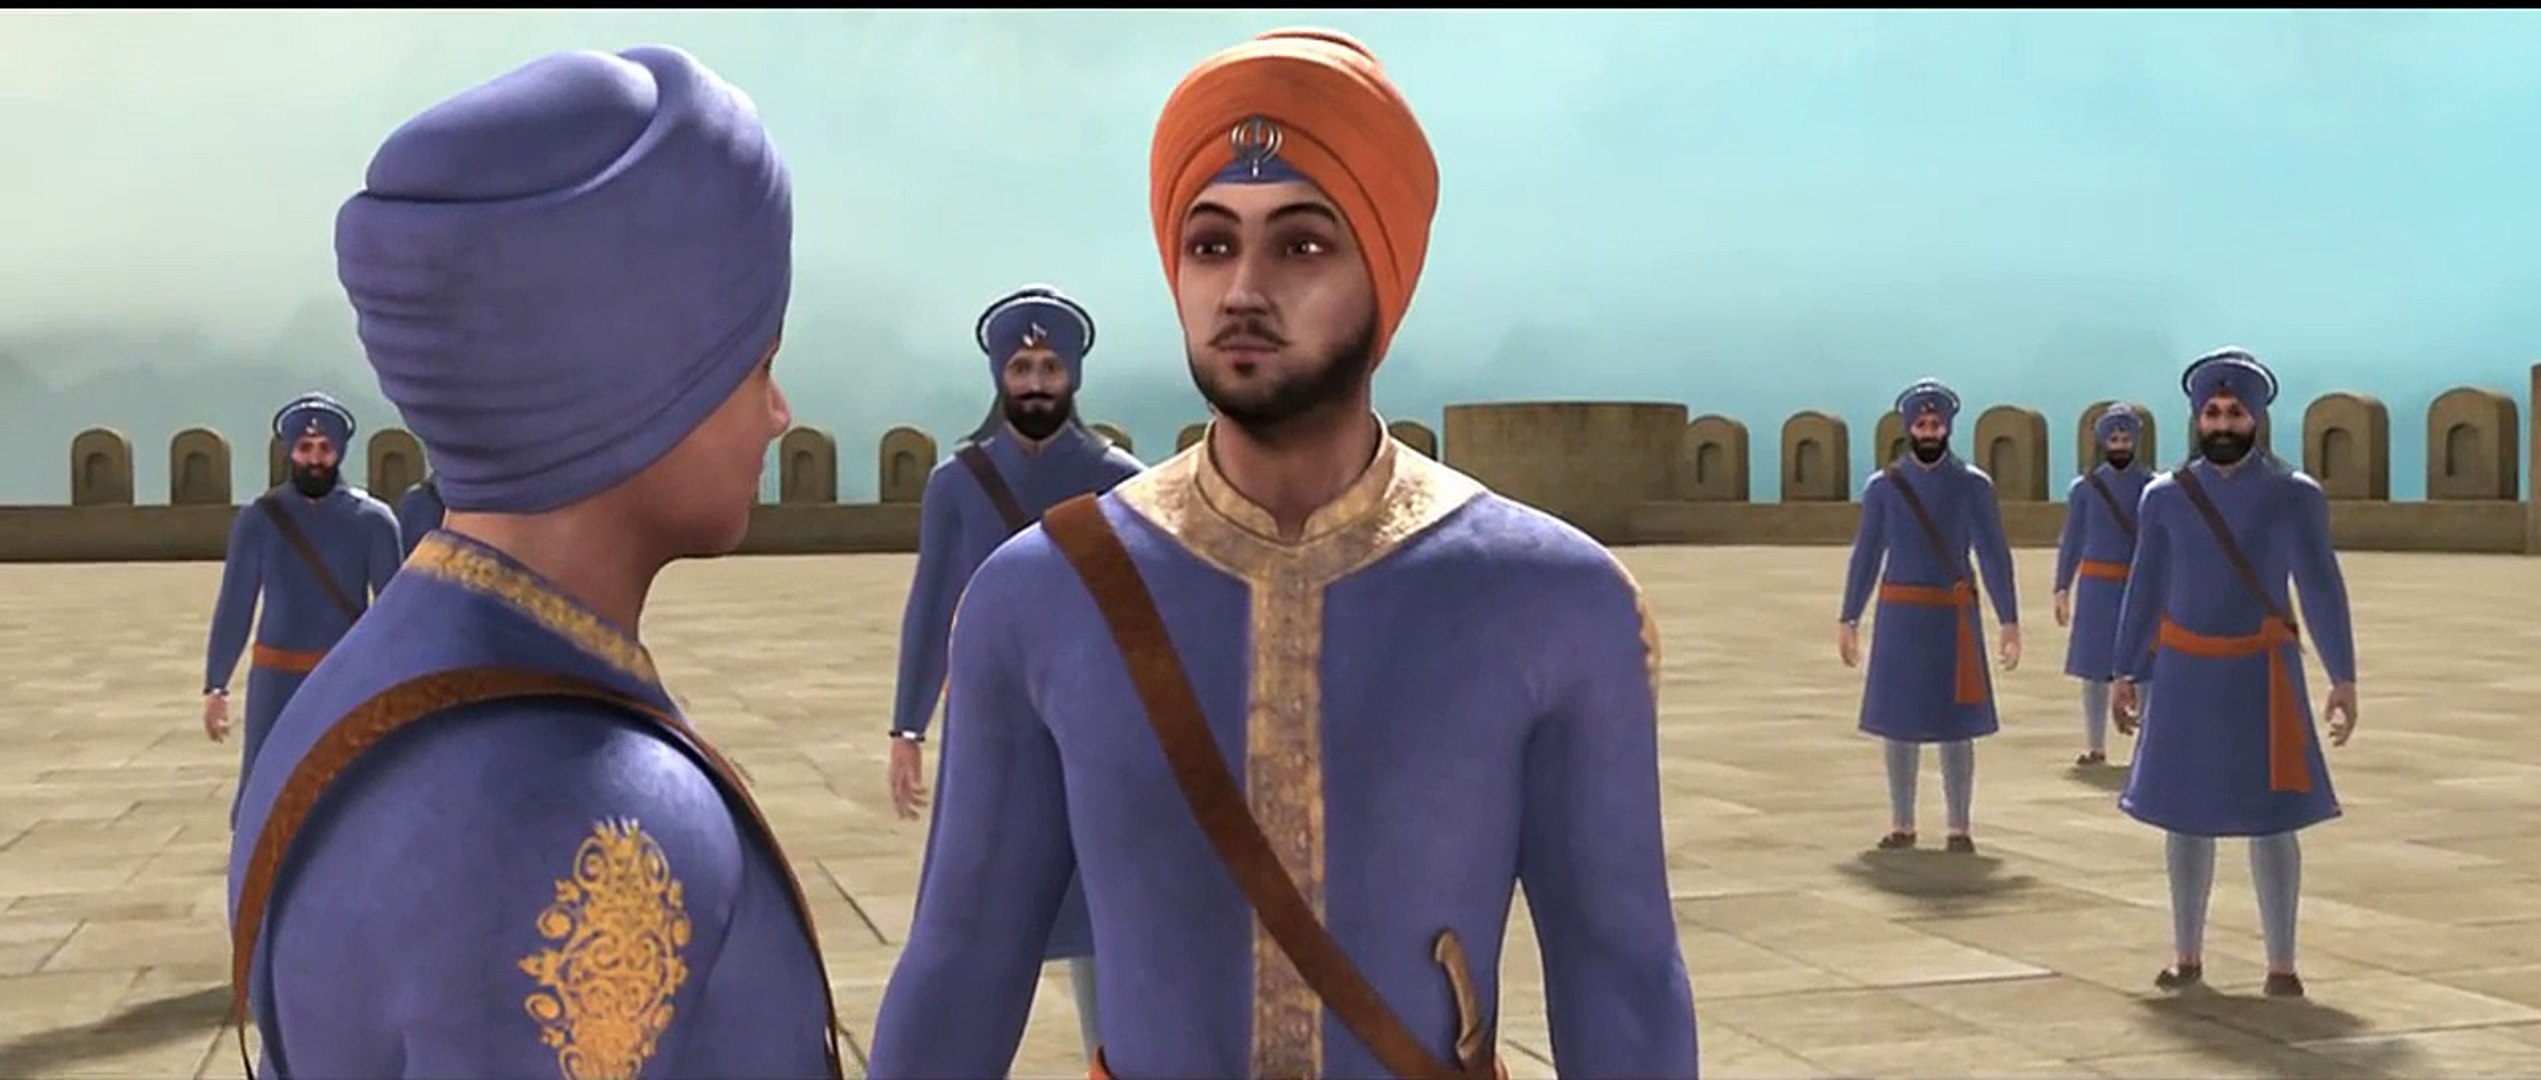 Chaar Sahibzaade ਚਾਰ ਸਾਹਿਬਜਾਦੇ - Official Trailer | New Movies 2015 |  Animated 3D Movies - video Dailymotion